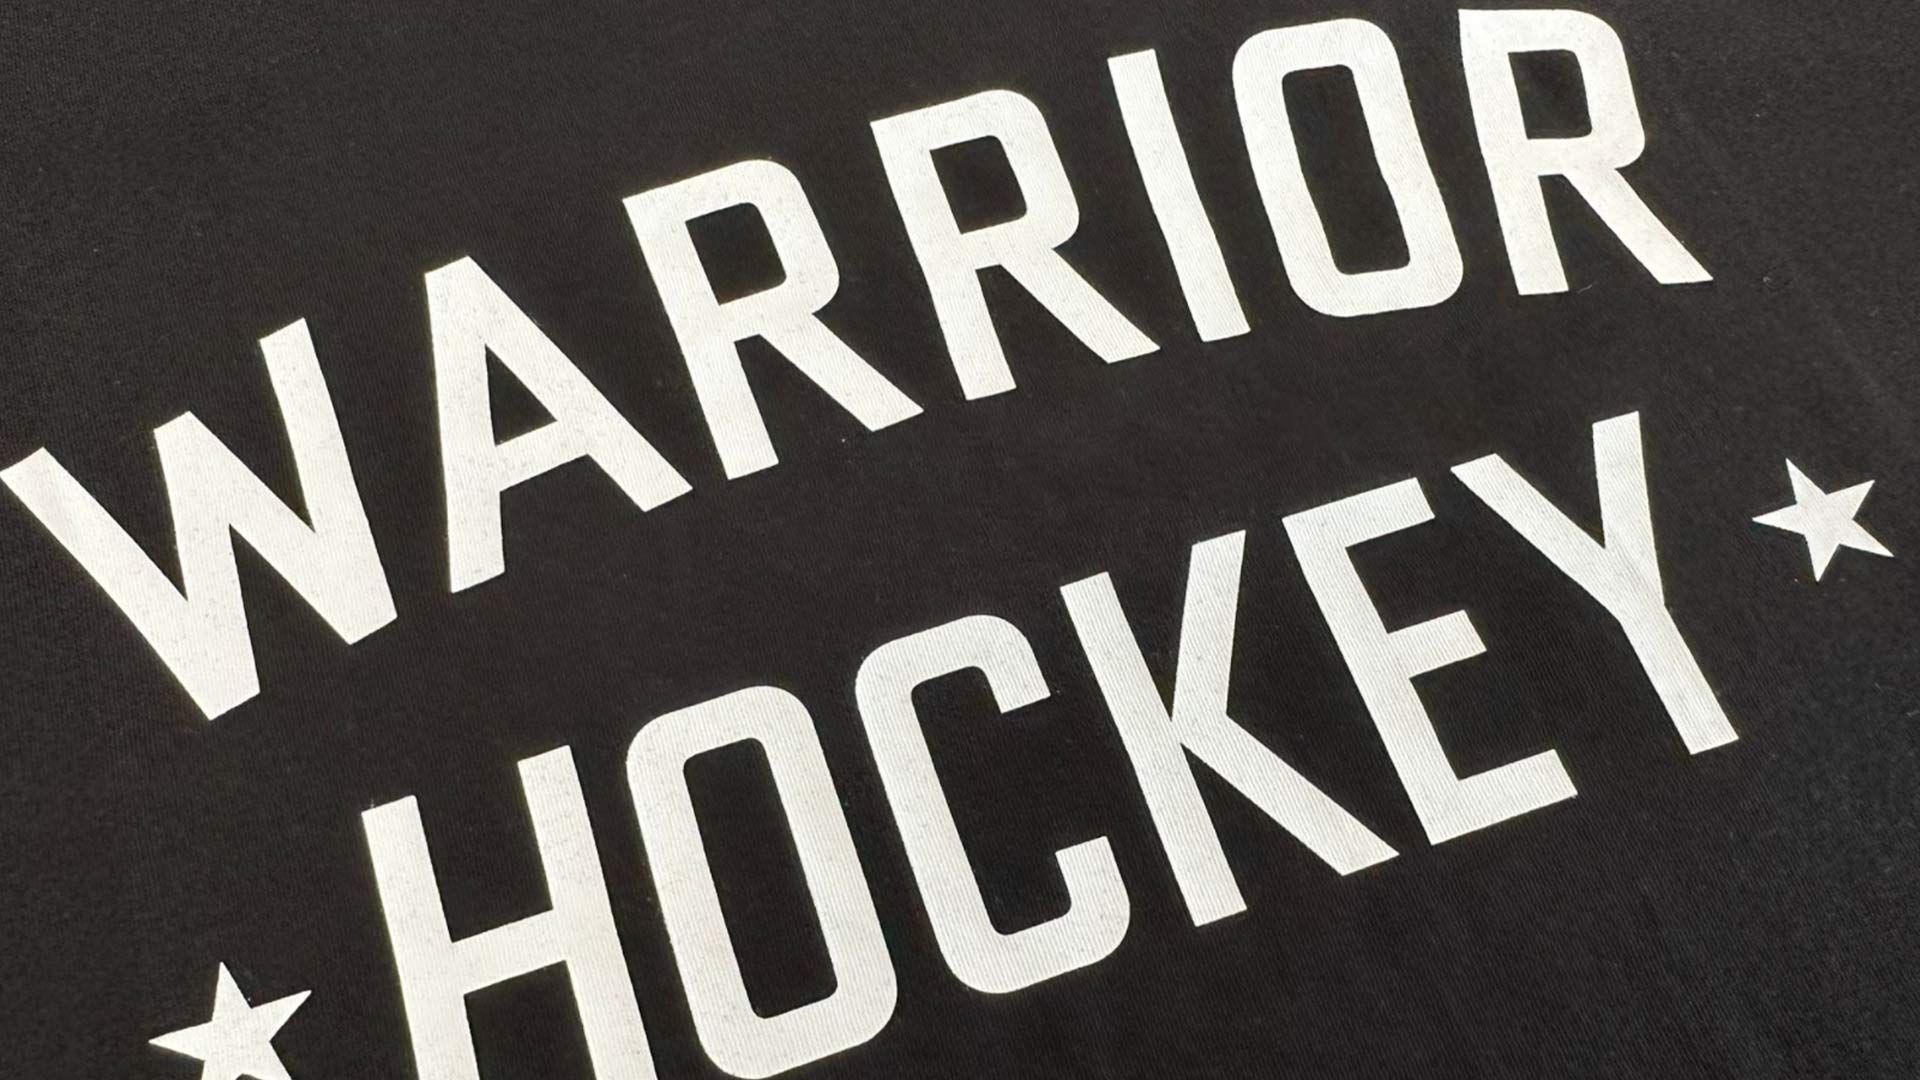 warrior-hockey.jpg